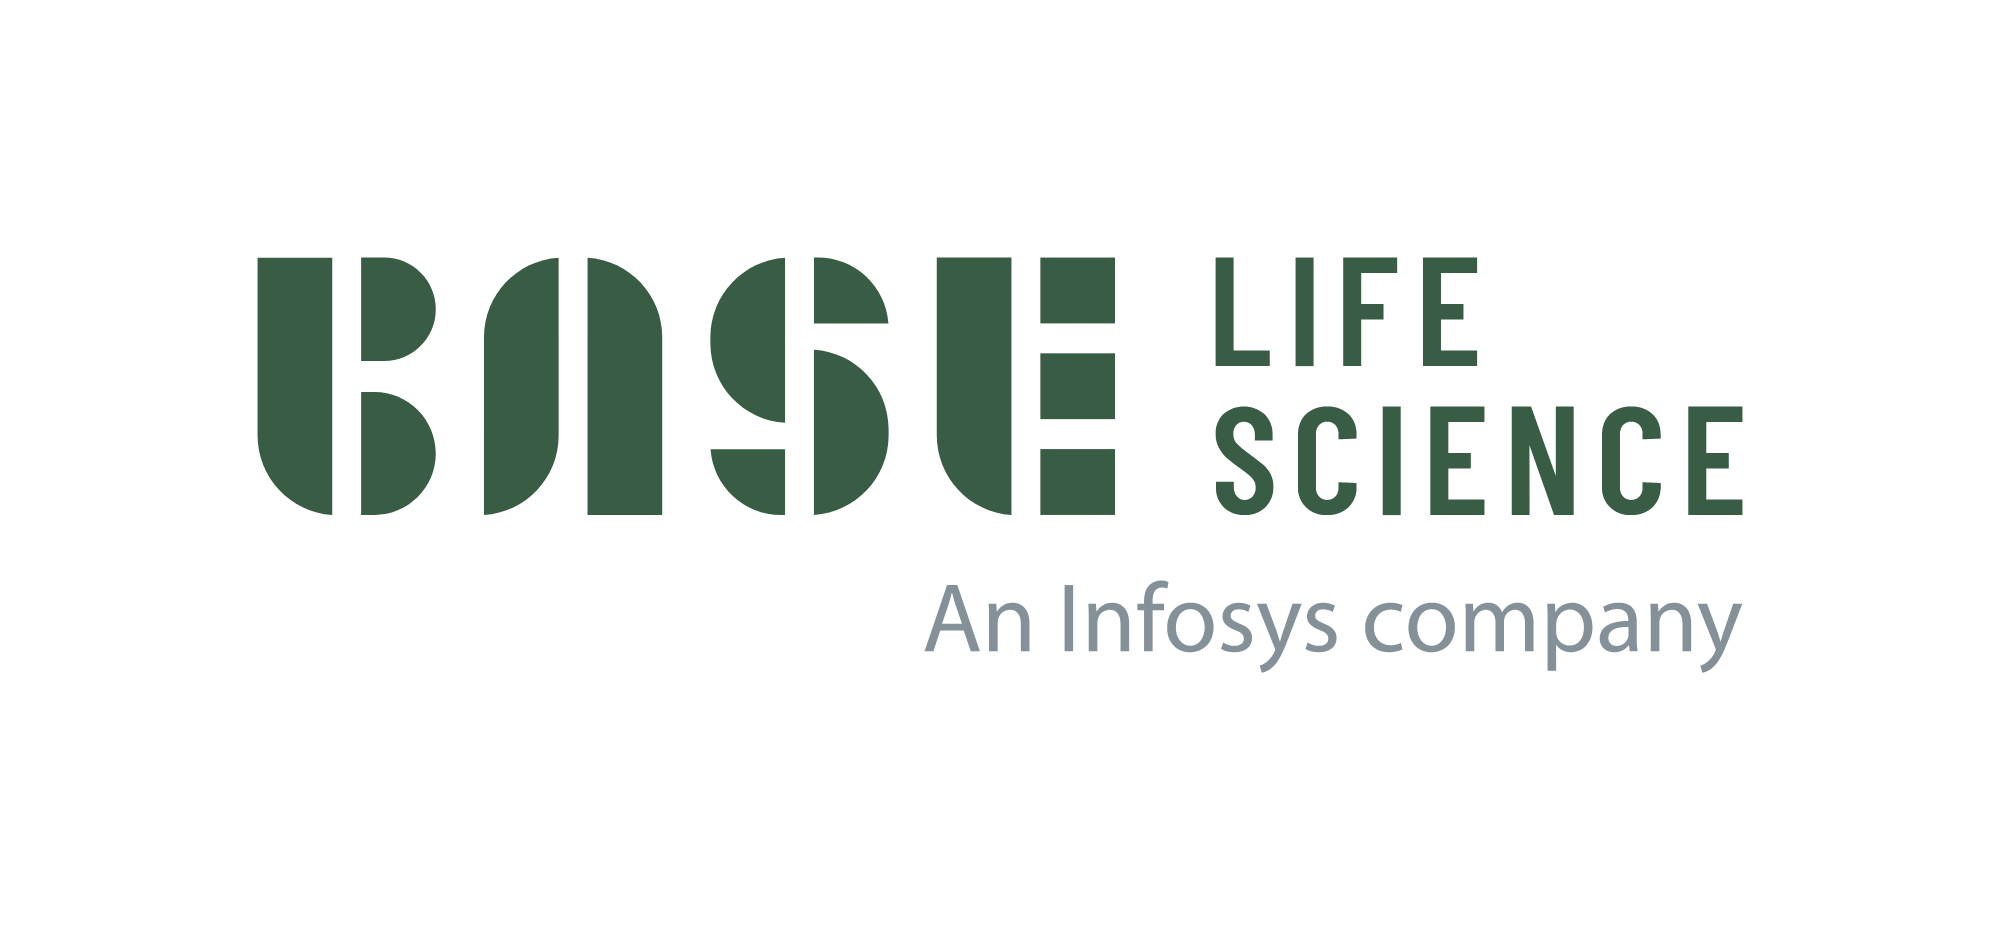 Base life science logo